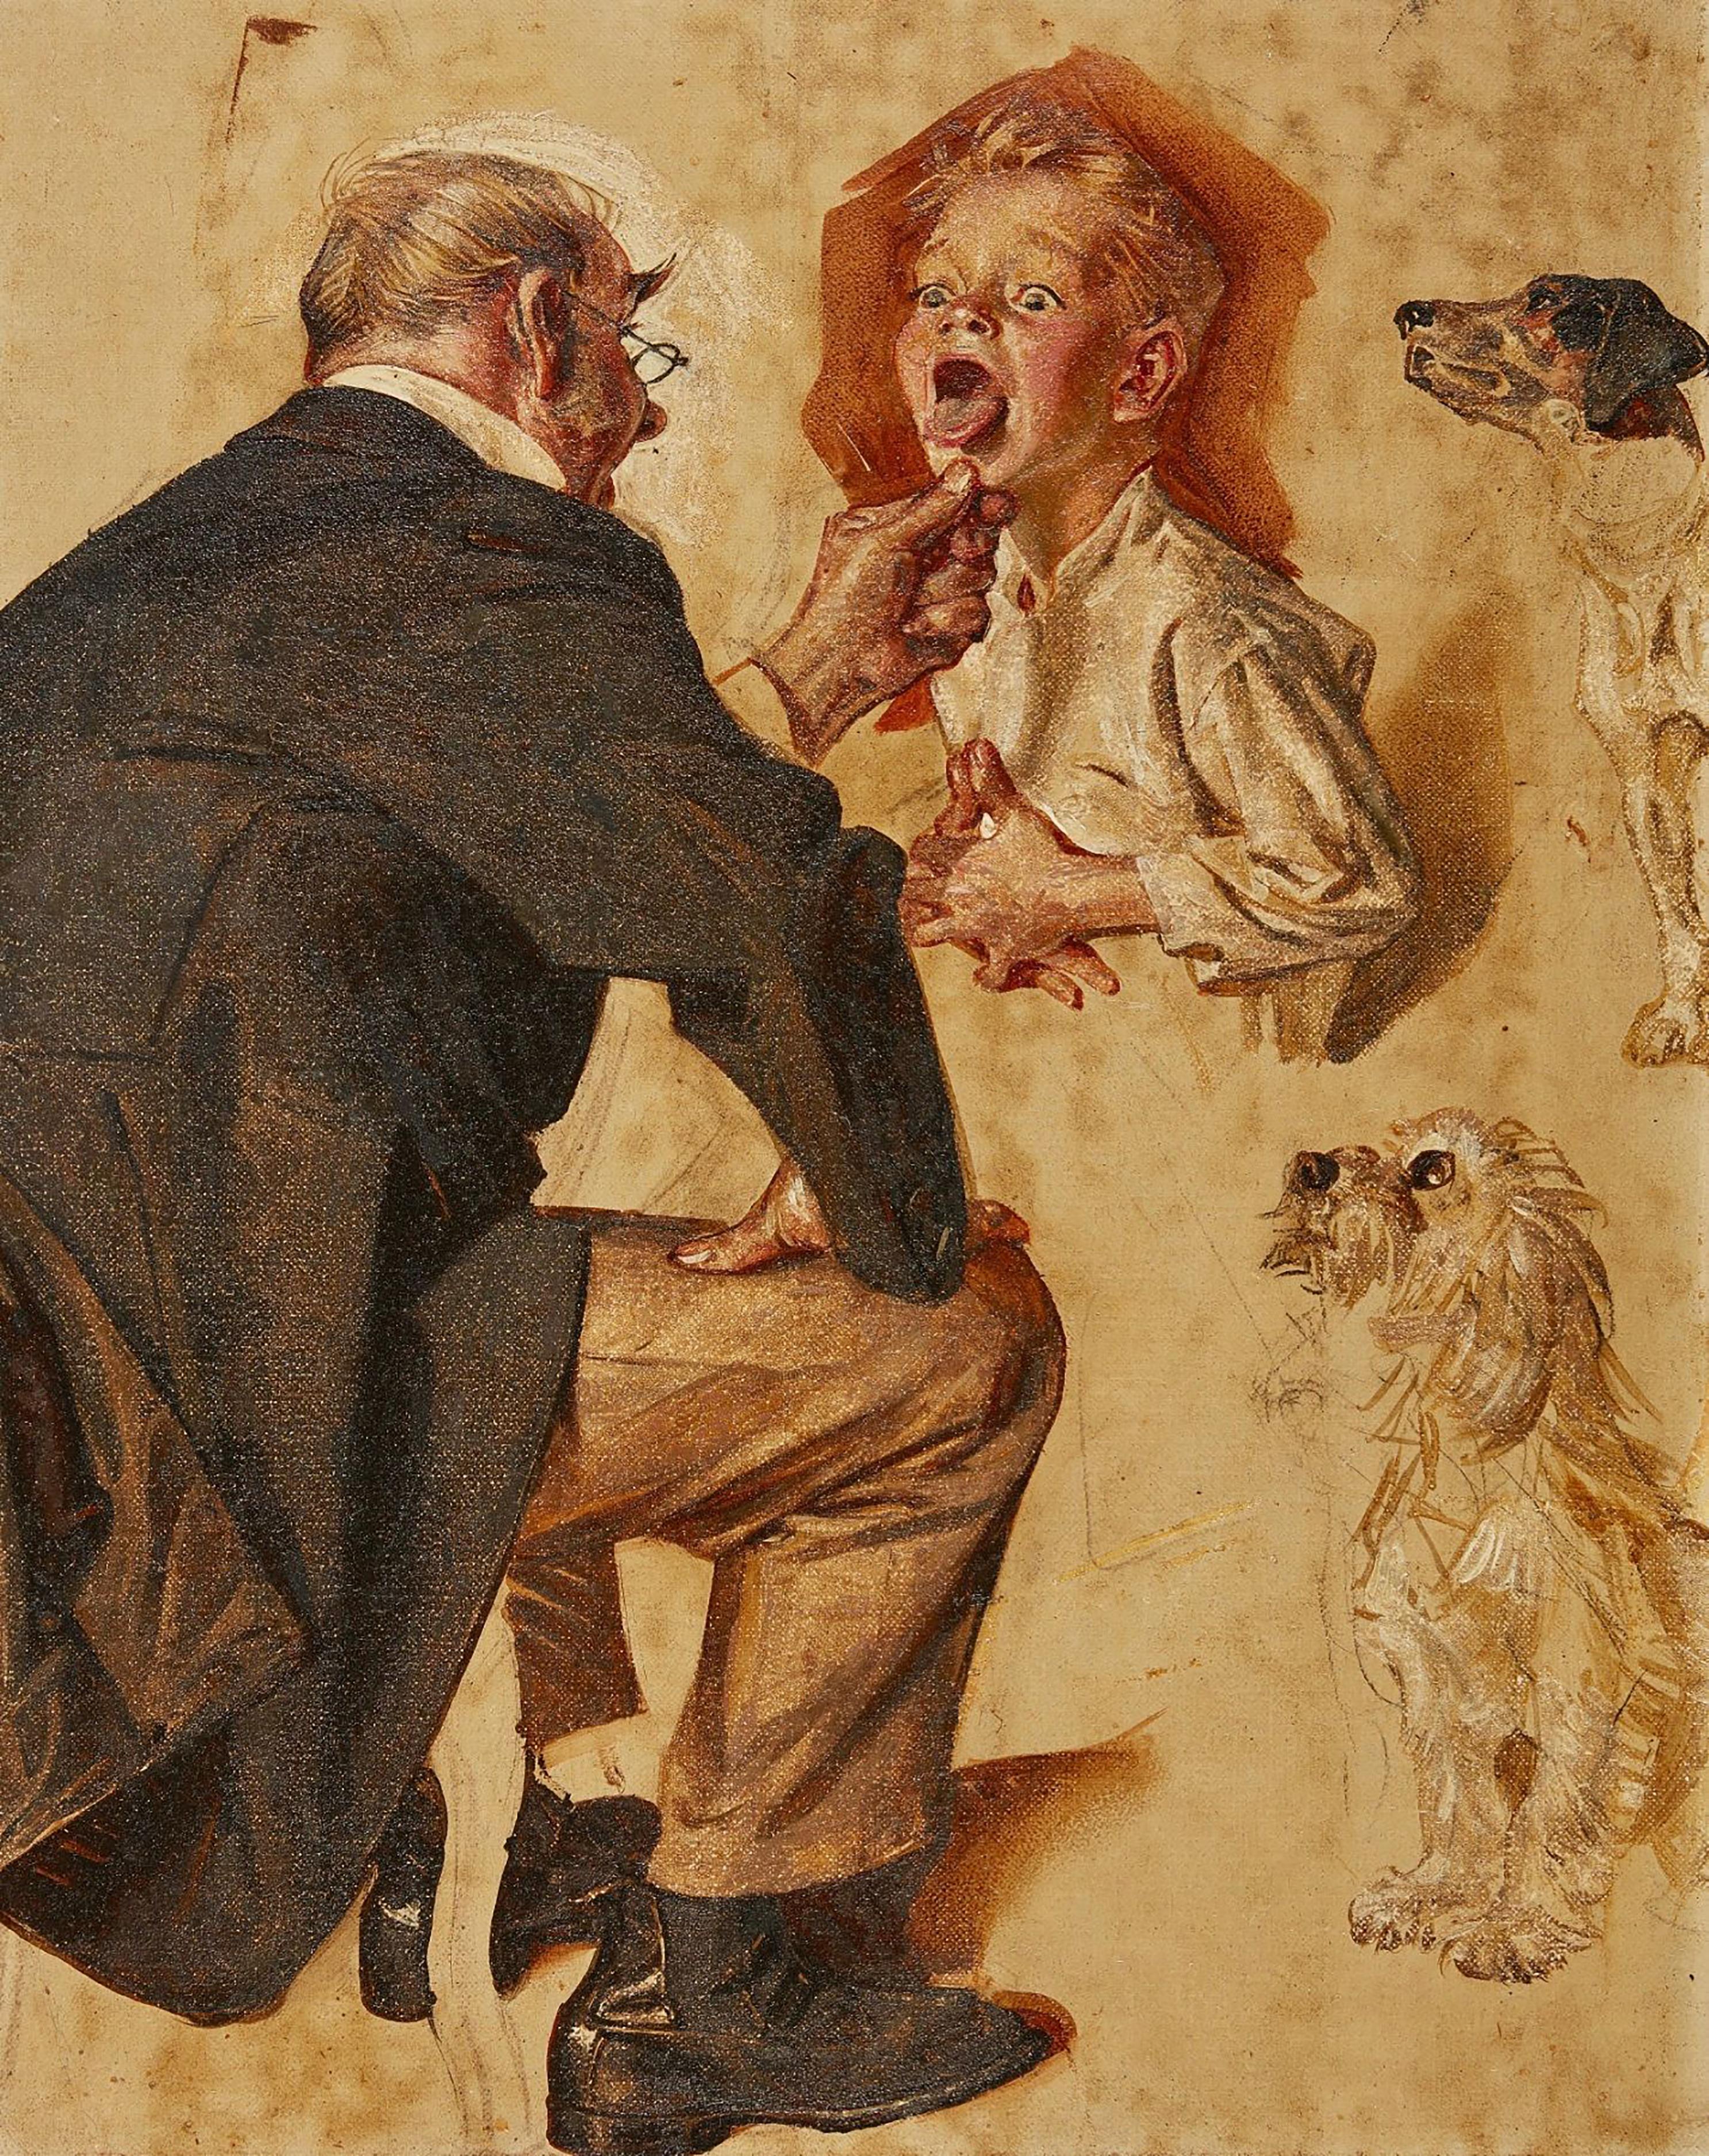 Joseph Christian Leyendecker Figurative Painting – Doctor Looking into Childs Mouth, Studie für das Cover von SEP, 1930